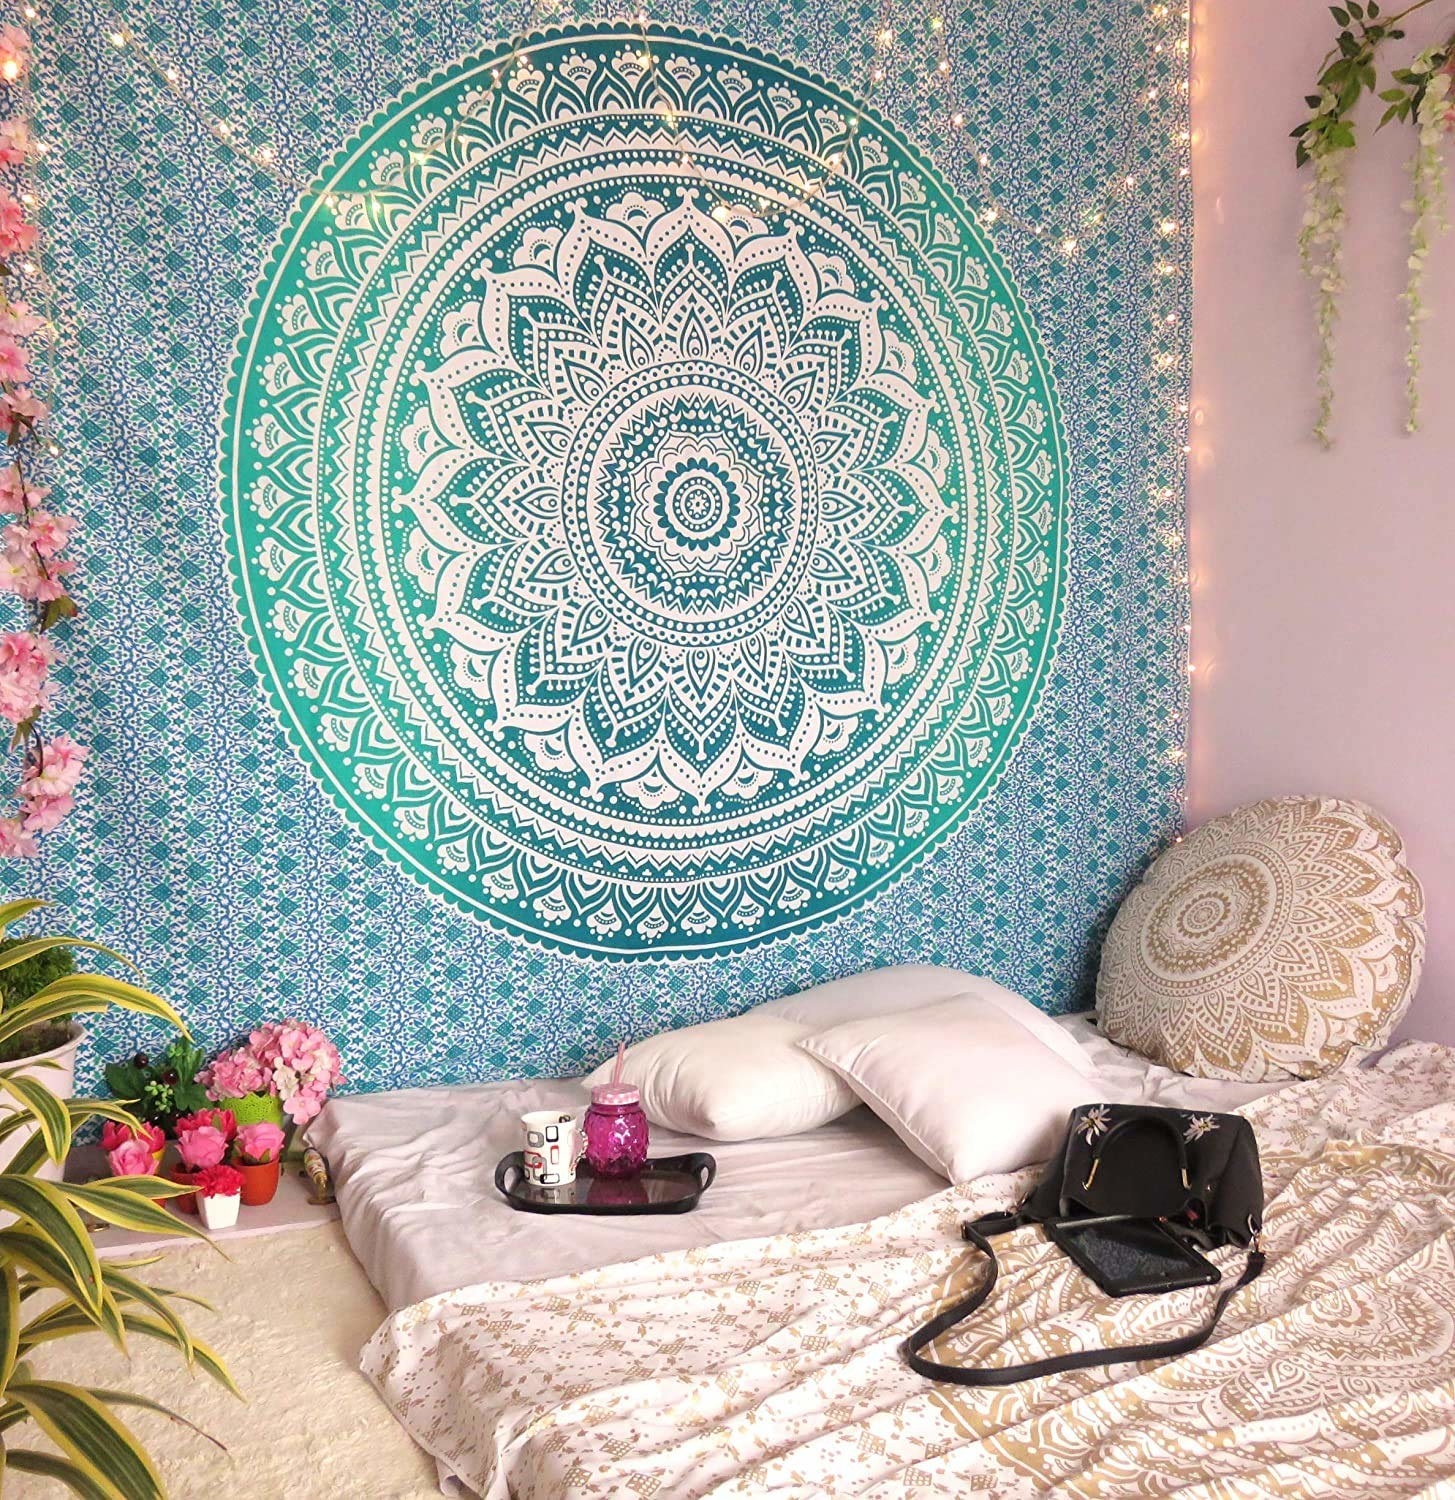 A white, blue an d green Mandala tapestry on a wall, up against a mattress.